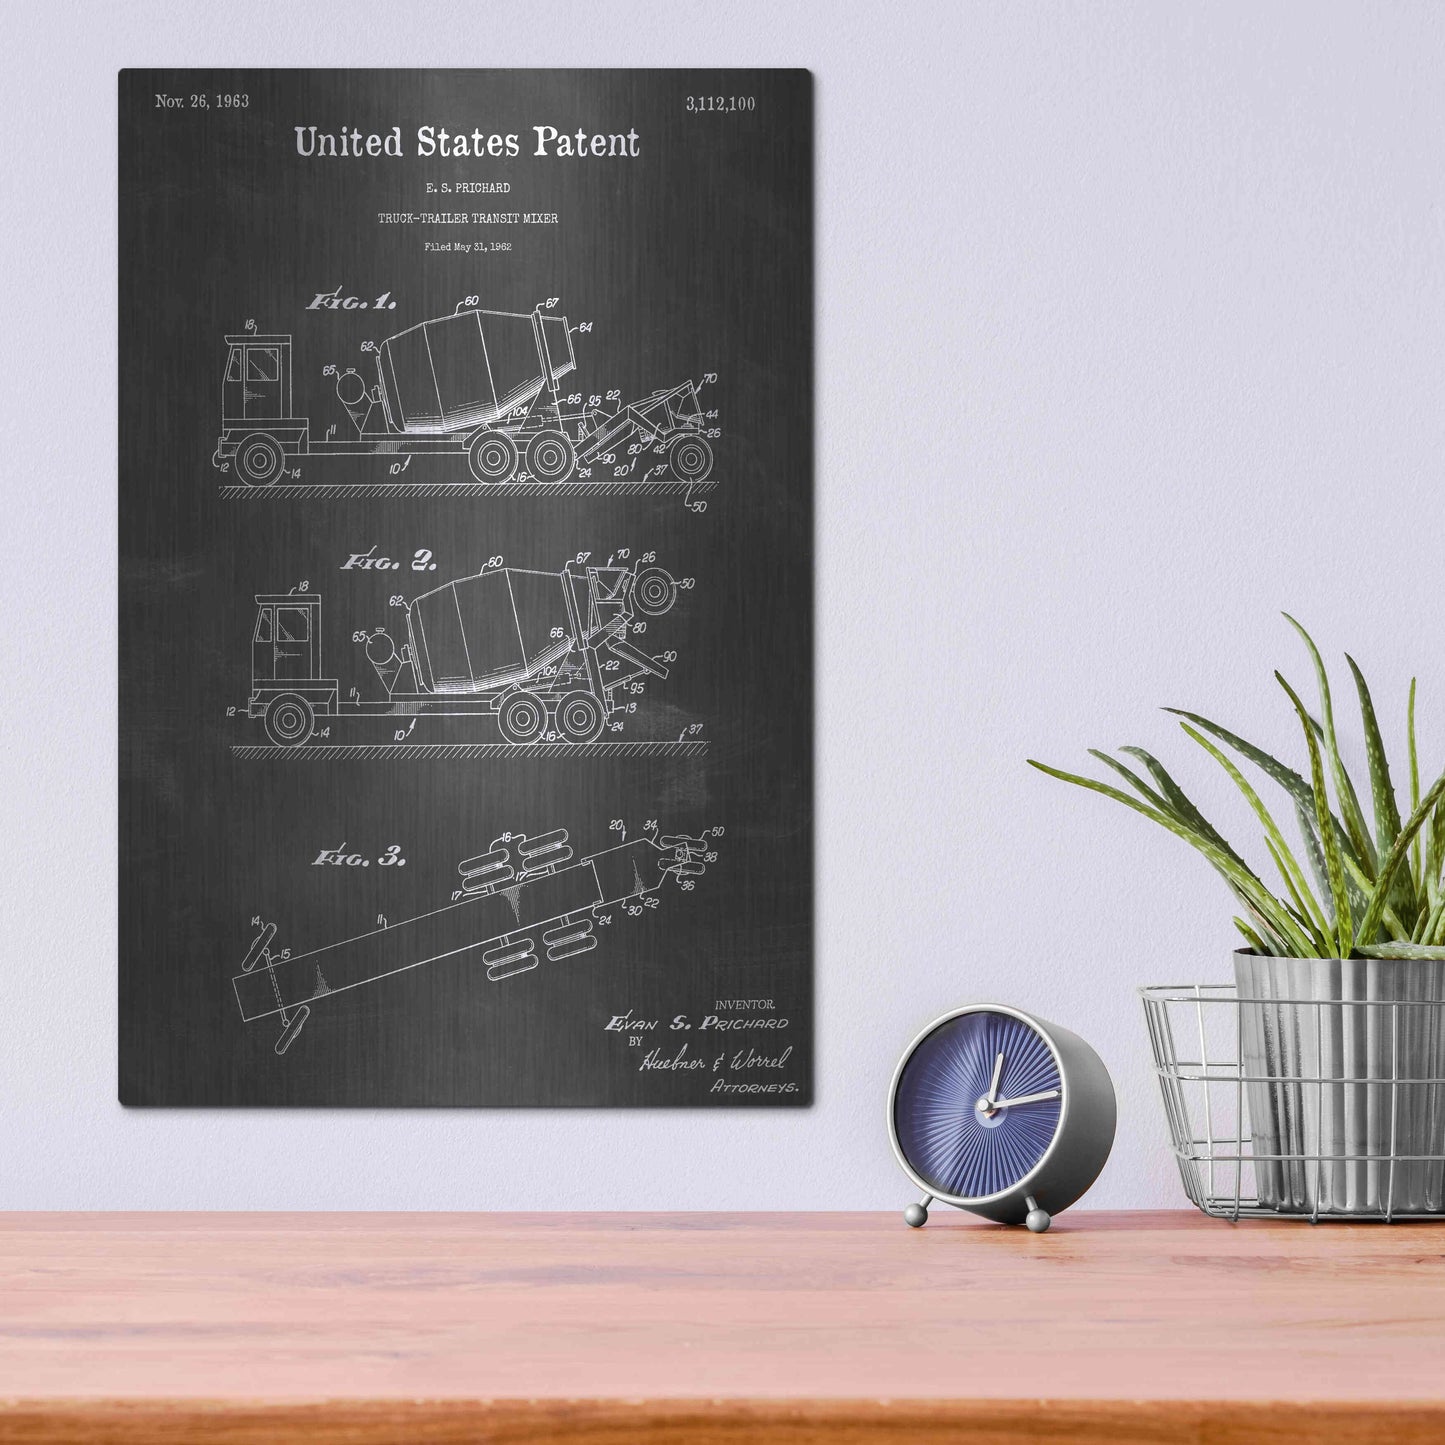 Luxe Metal Art 'Truck-trailer Transit Mixer Vintage Patent Blueprint' by Epic Portfolio, Metal Wall Art,12x16